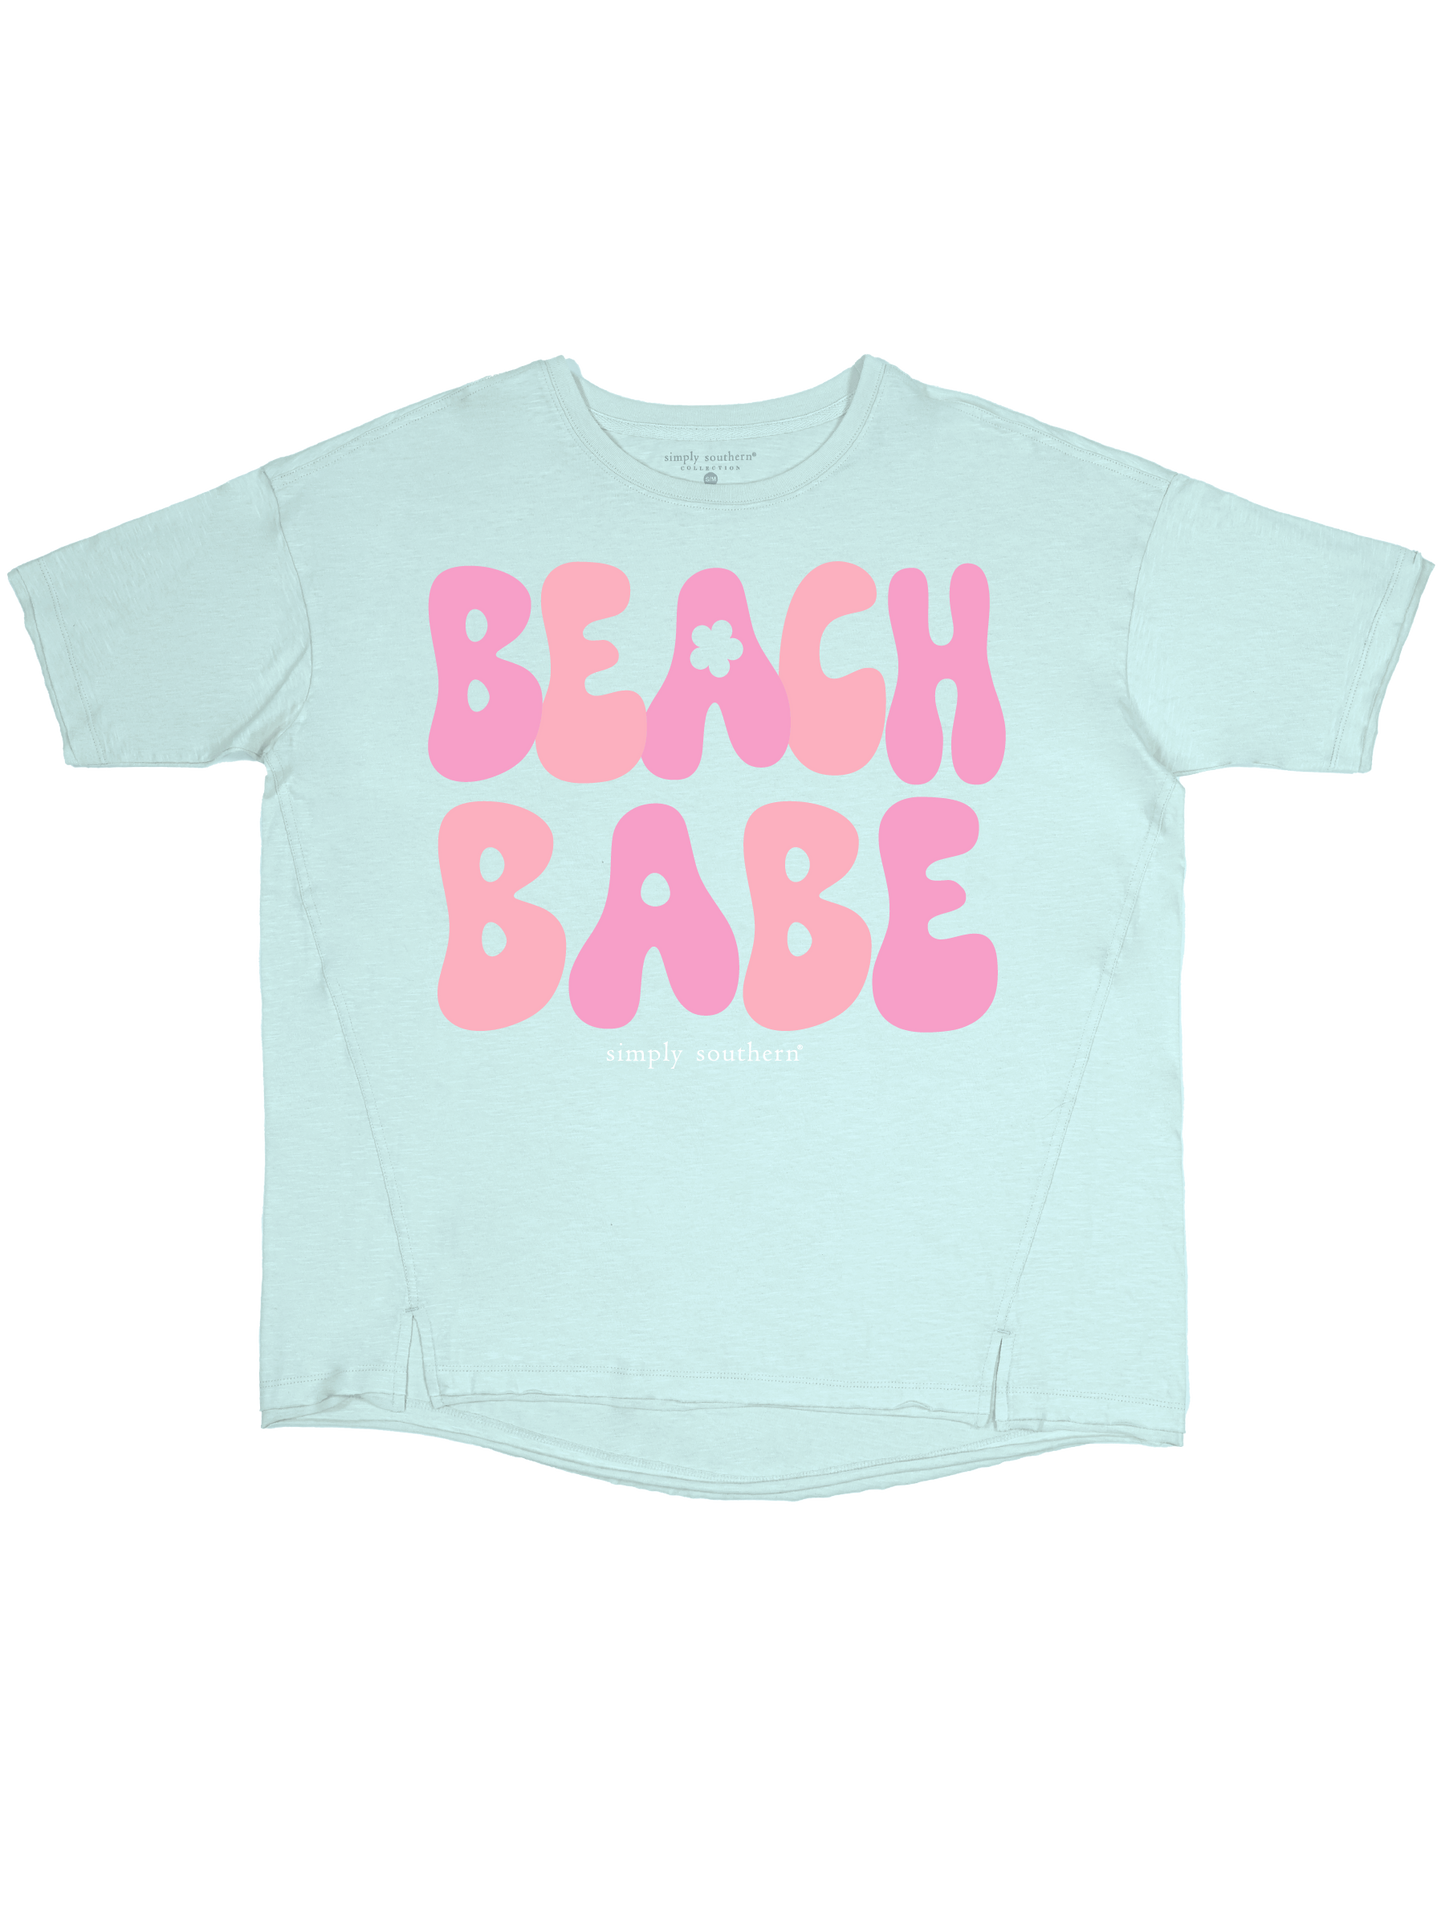 Beach Babe Boxy Shirt